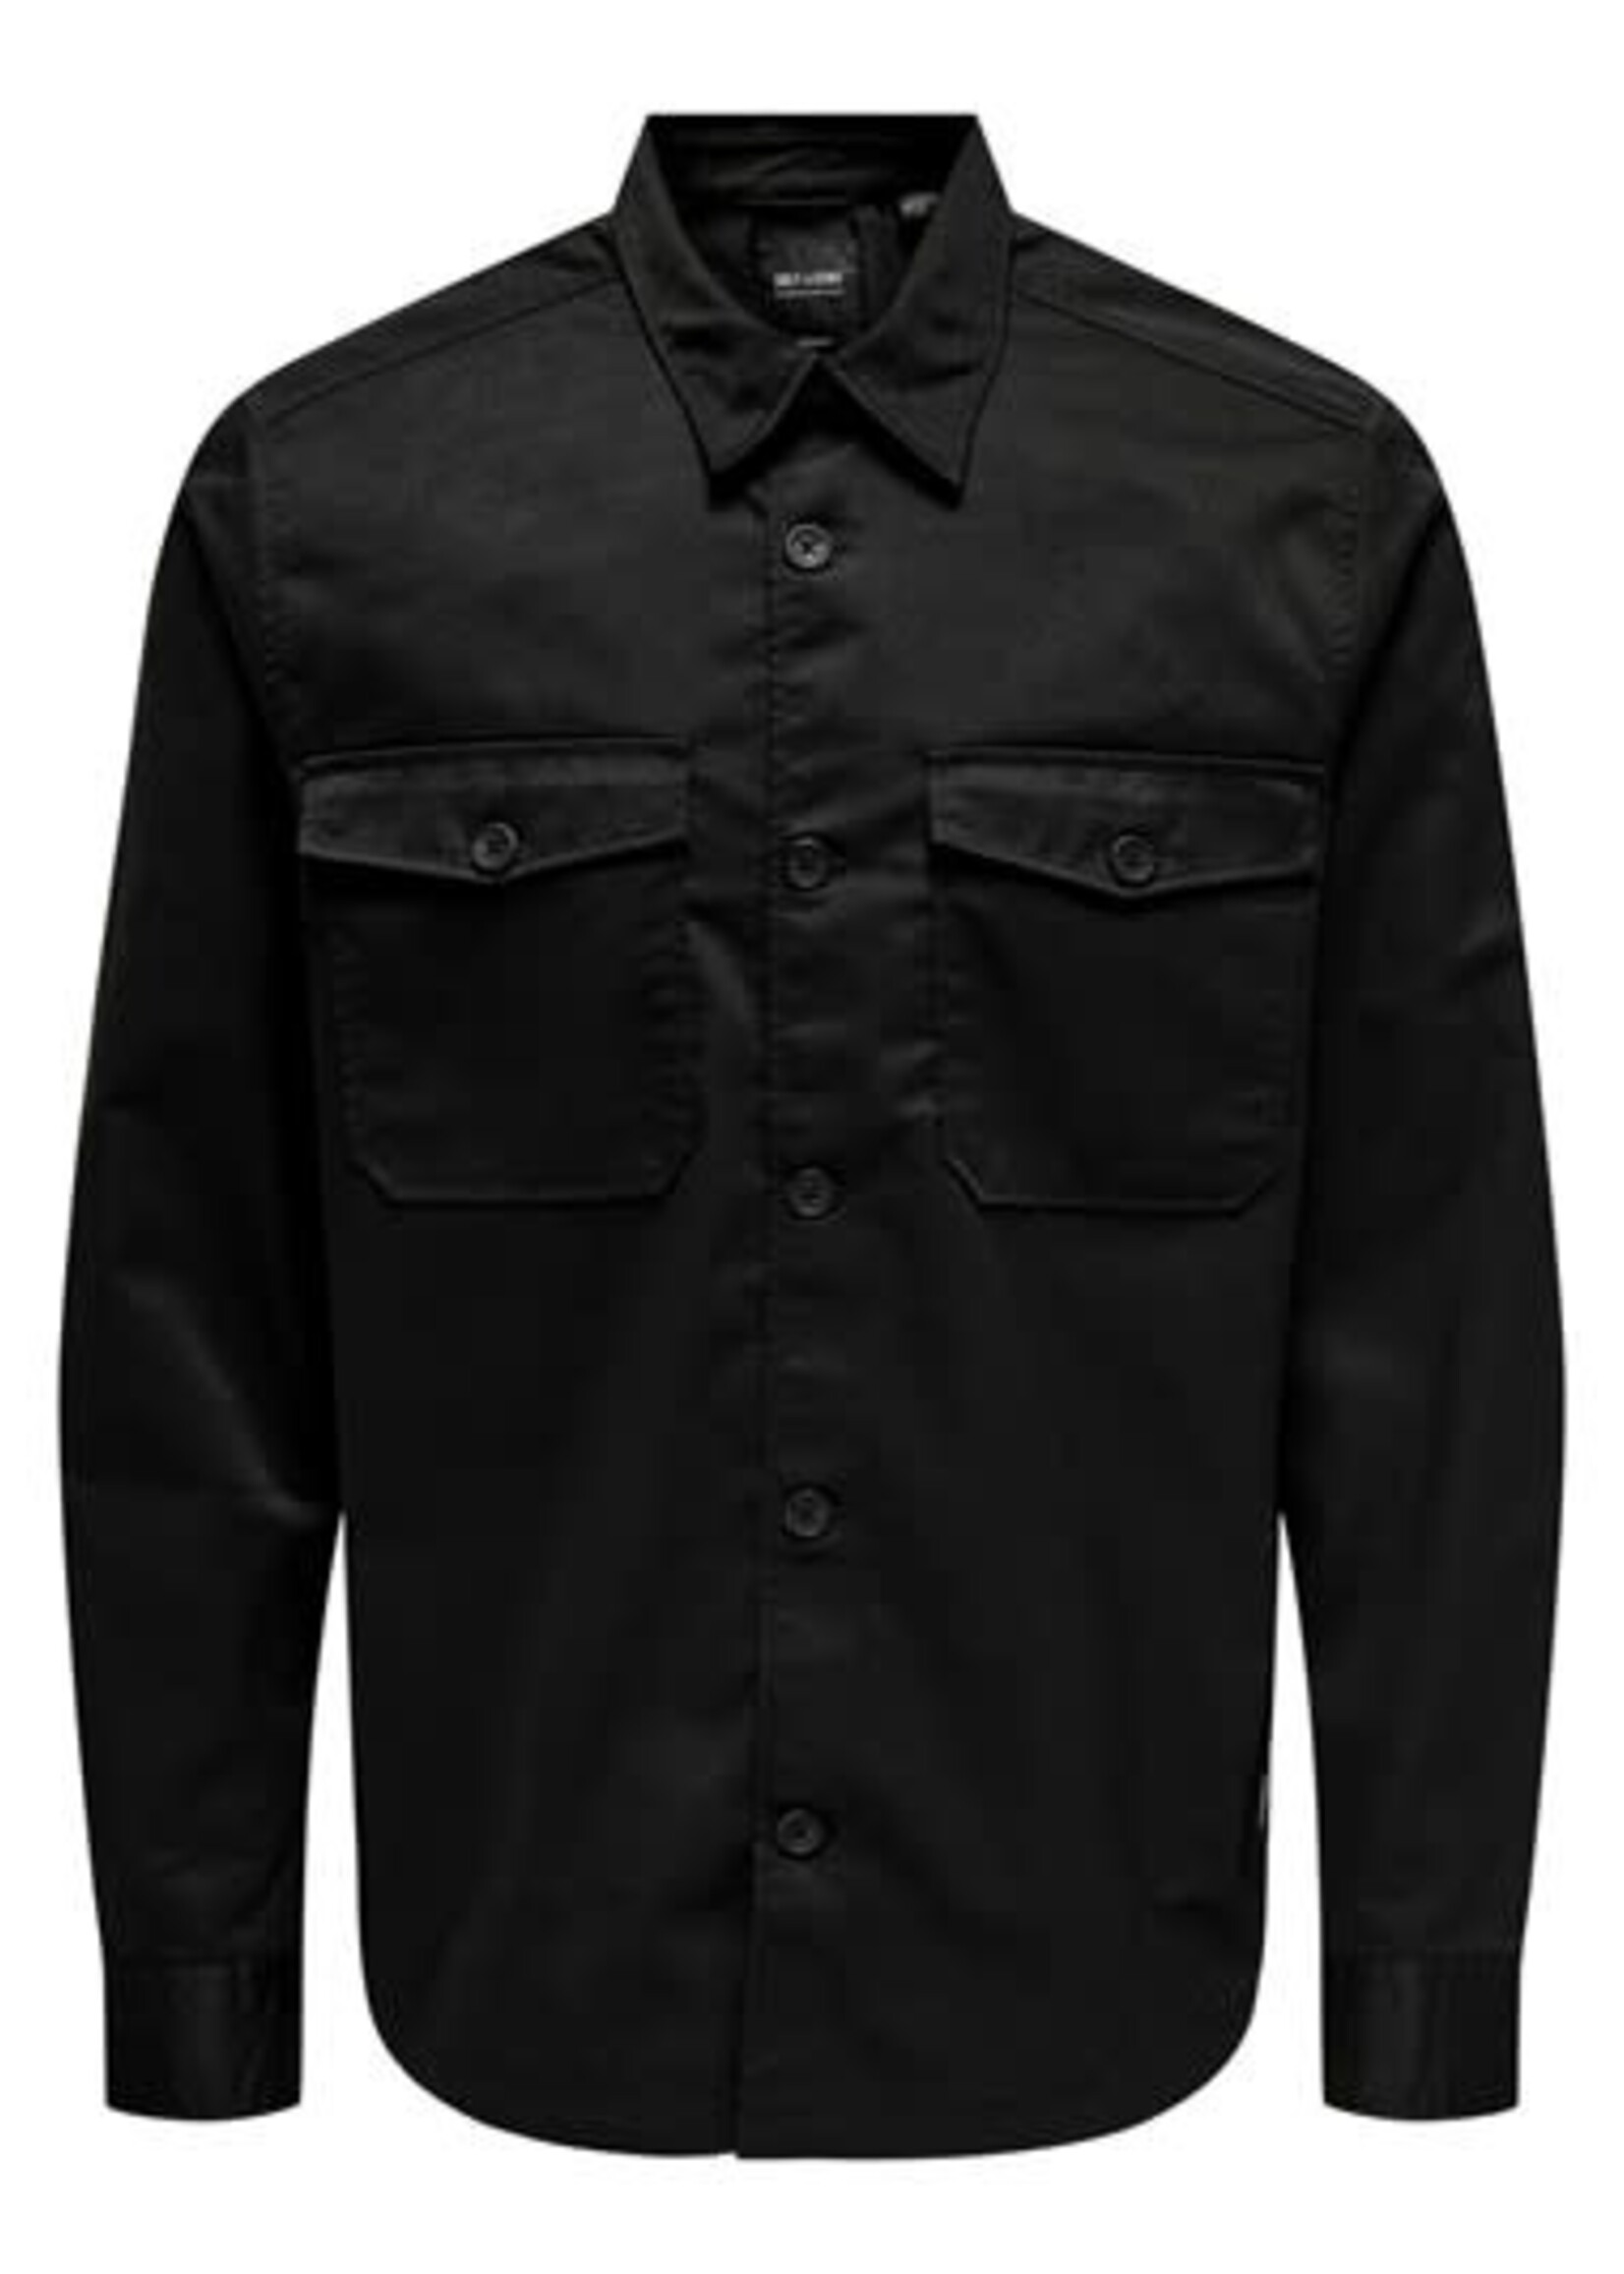 Only & Sons Milo Mercerized Twill  Shirt Black